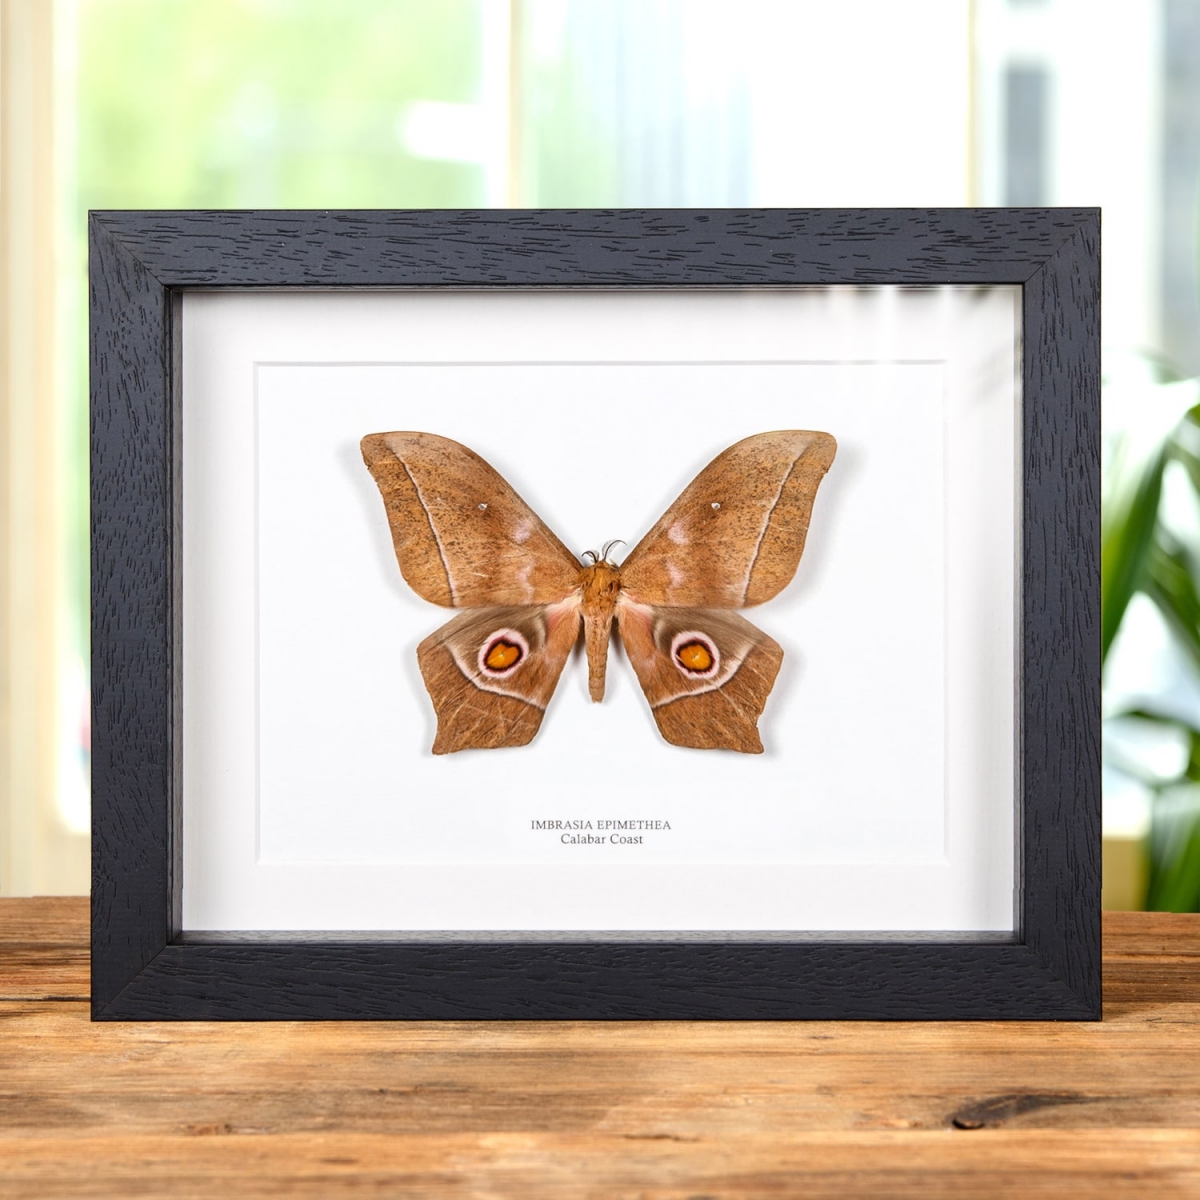 Minibeast Imbrasia epimethea Moth In Box Frame From Calabar Coast